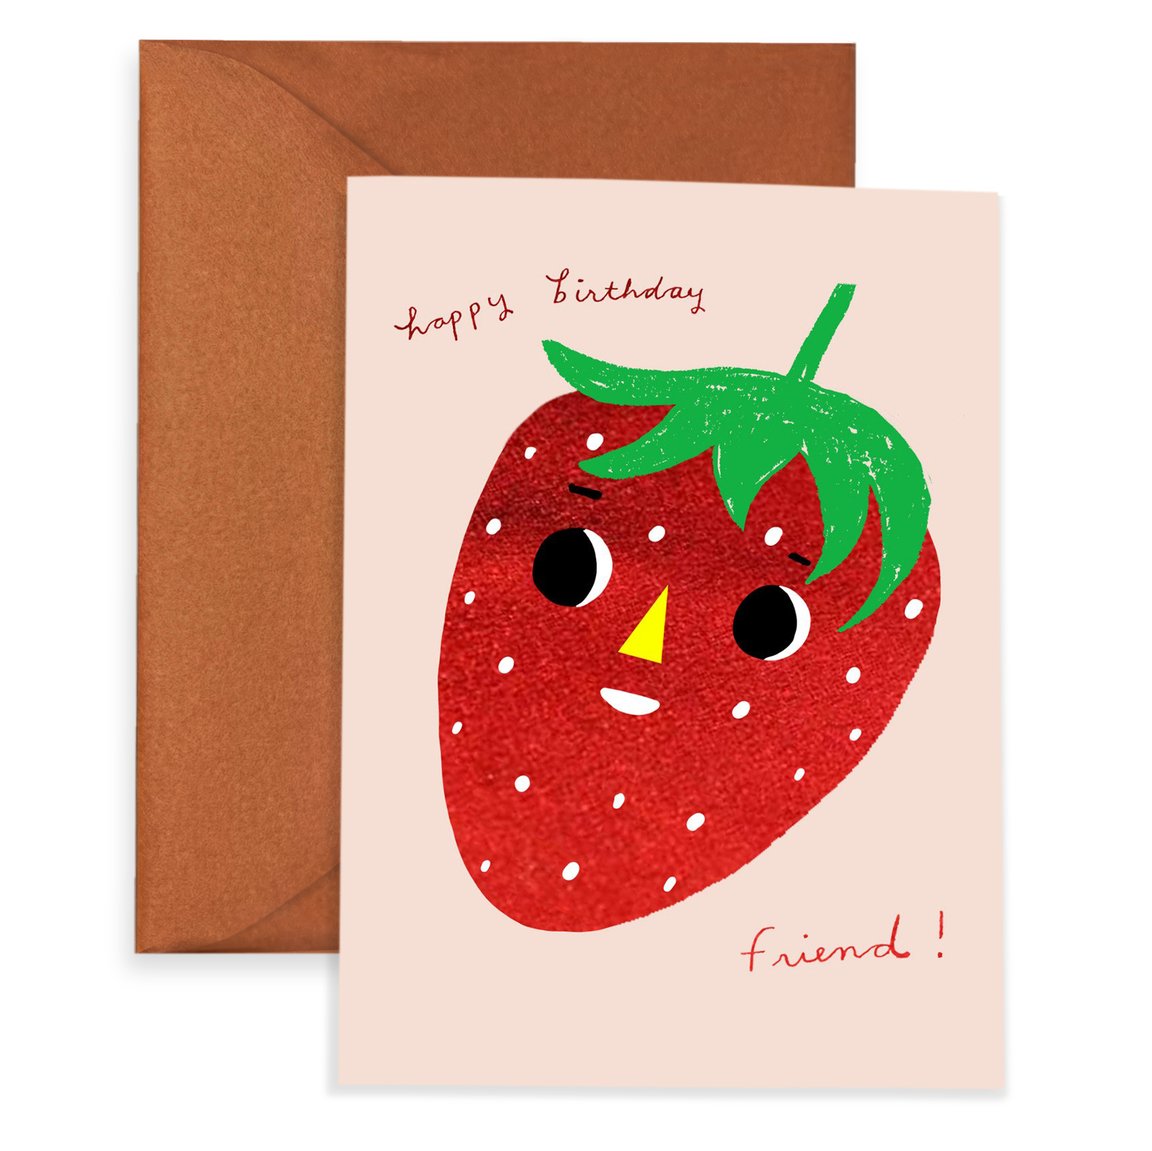 Strawberry fried Birthday Card